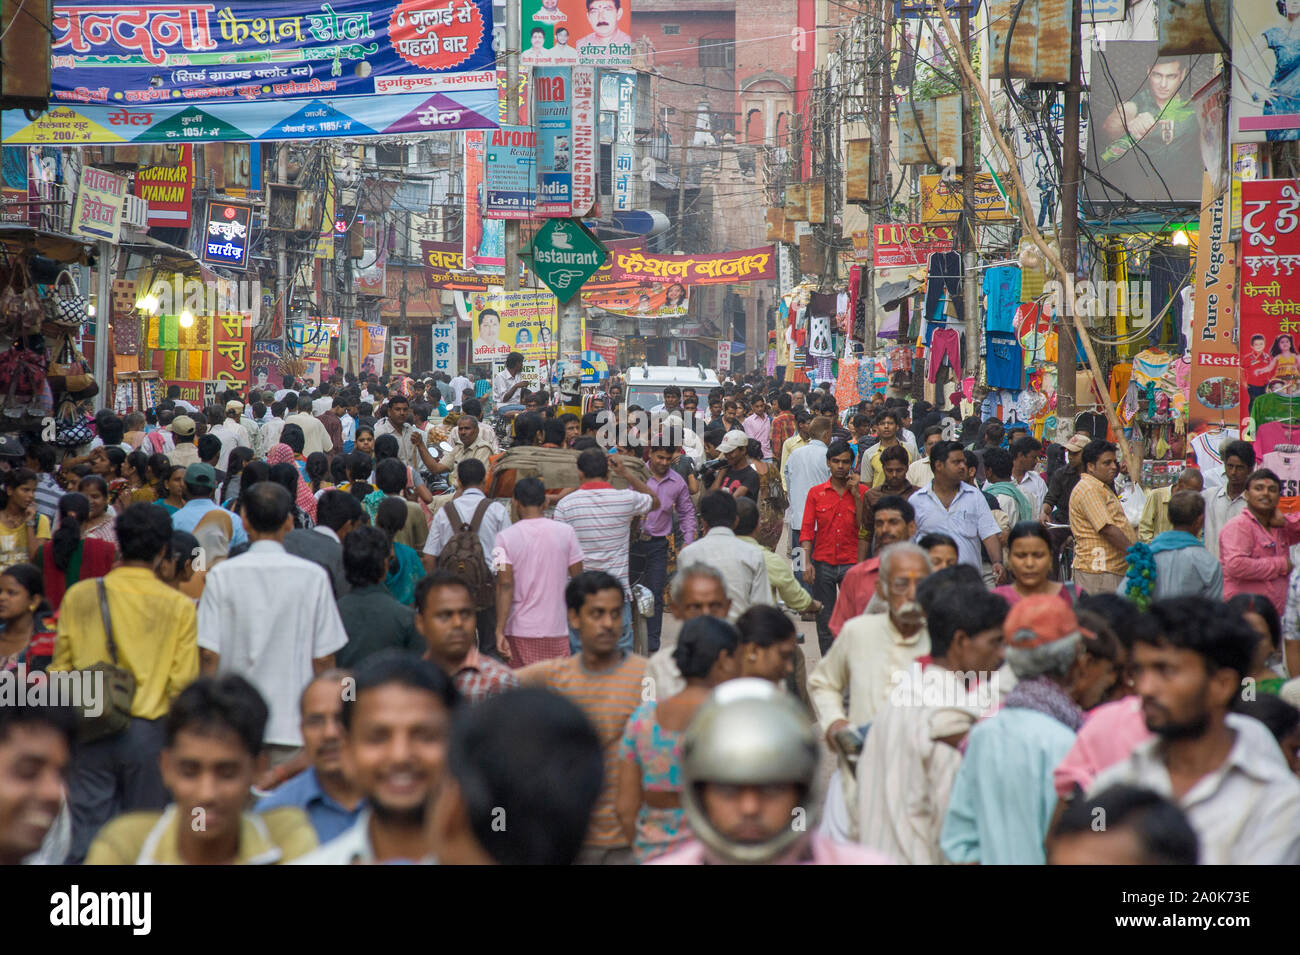 Ovecrowded street nel centro cittadino di Varanasi Foto Stock